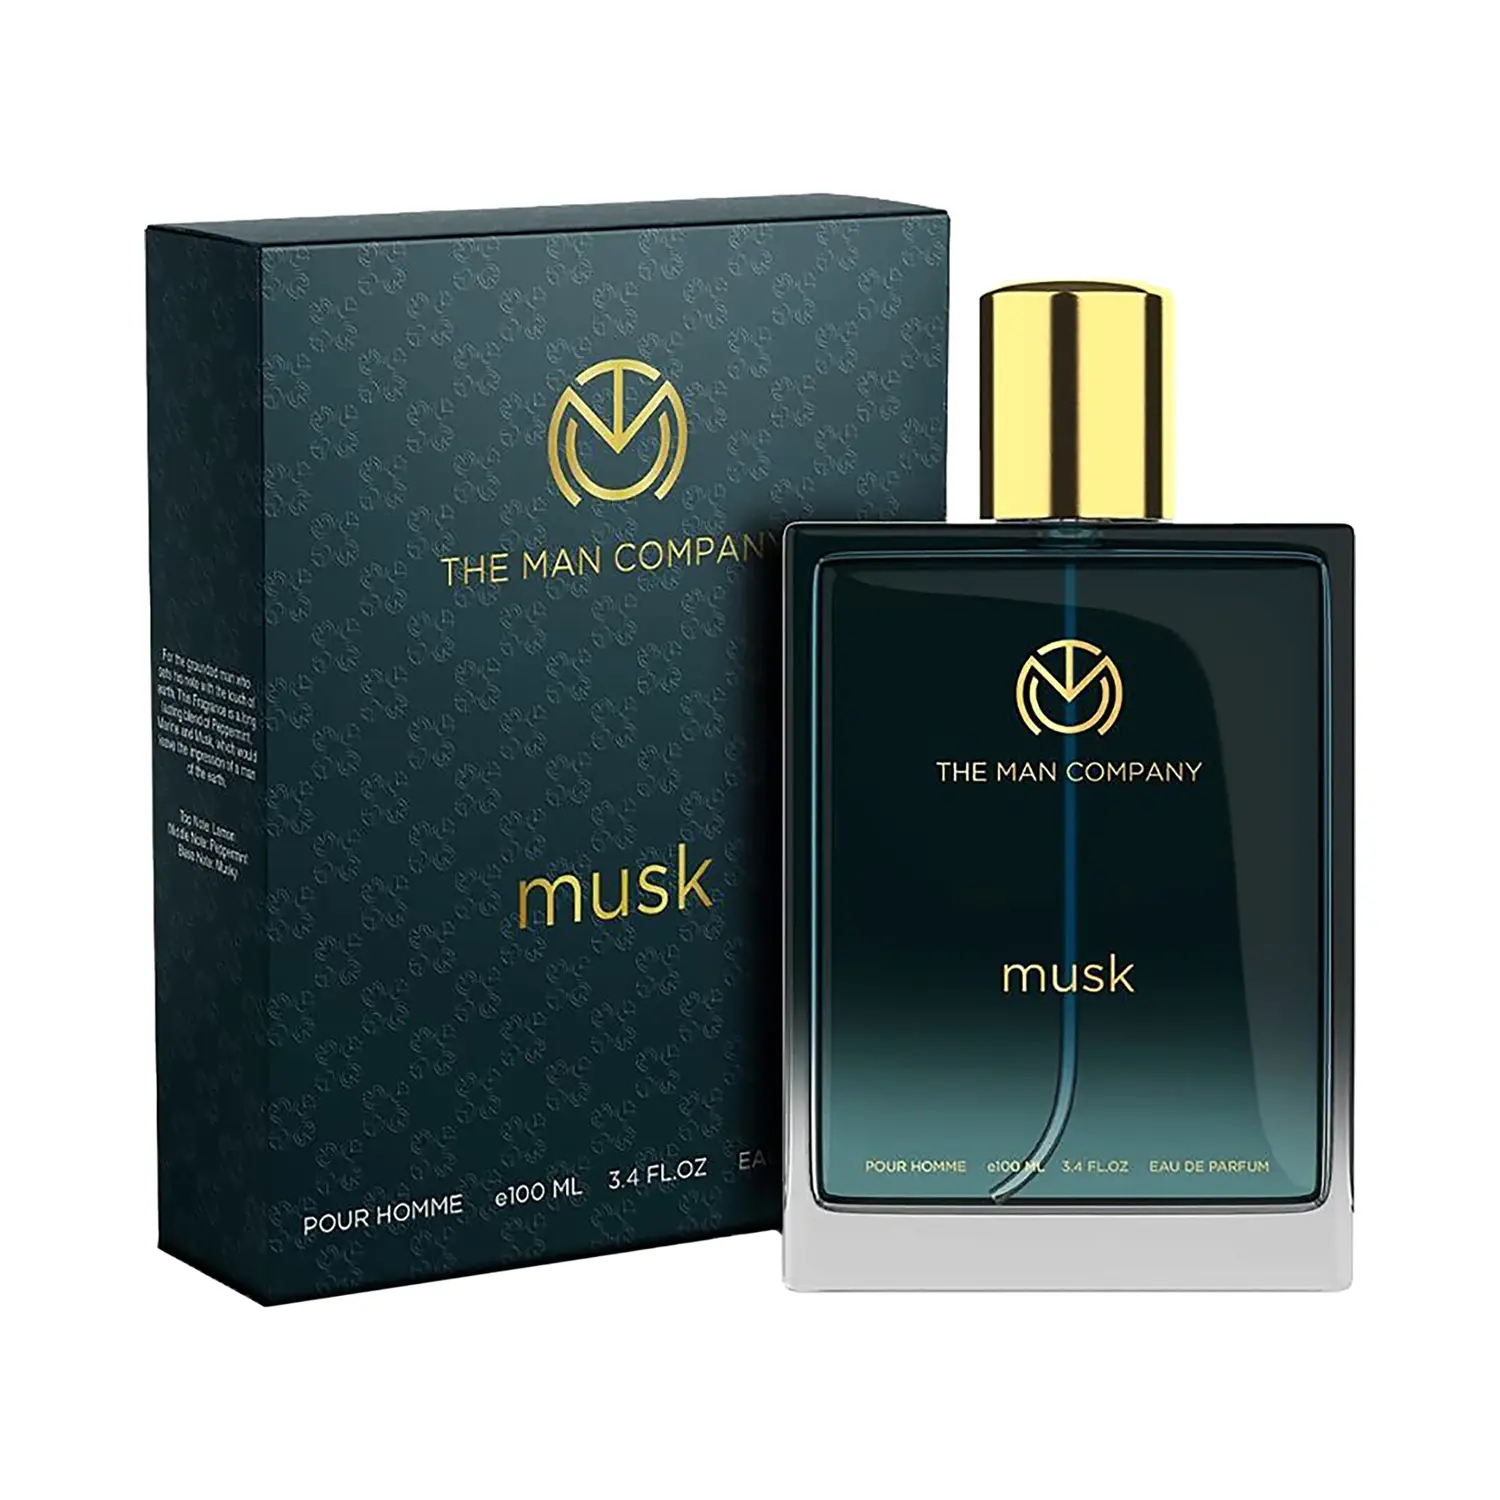 The Man Company Musk Eau De Parfum (100ml)